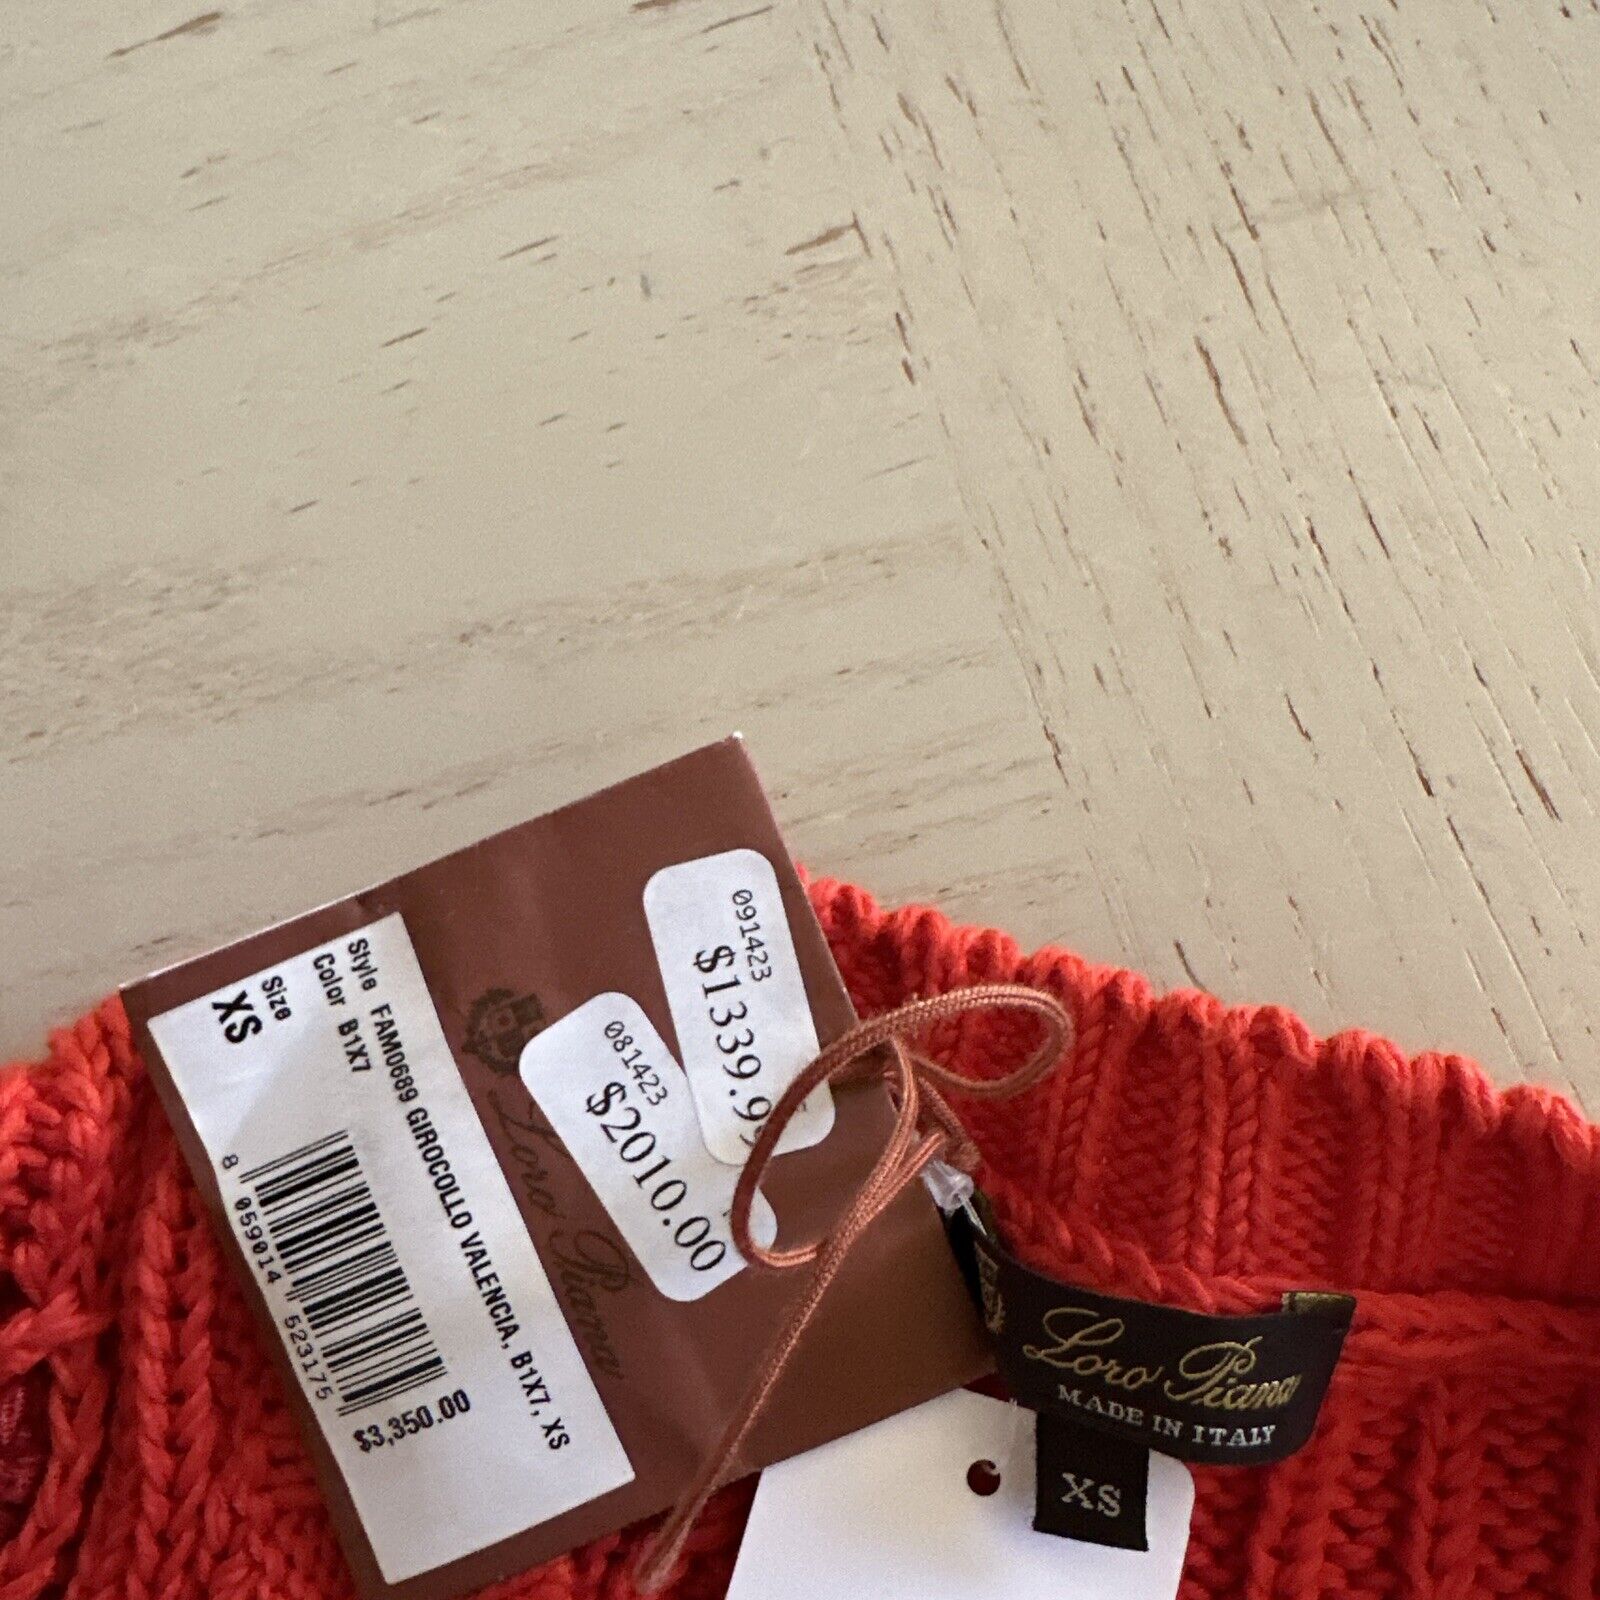 Loro Piana Women Valencia Cabled Cotton Sweater Orange Size XS Italy $3350